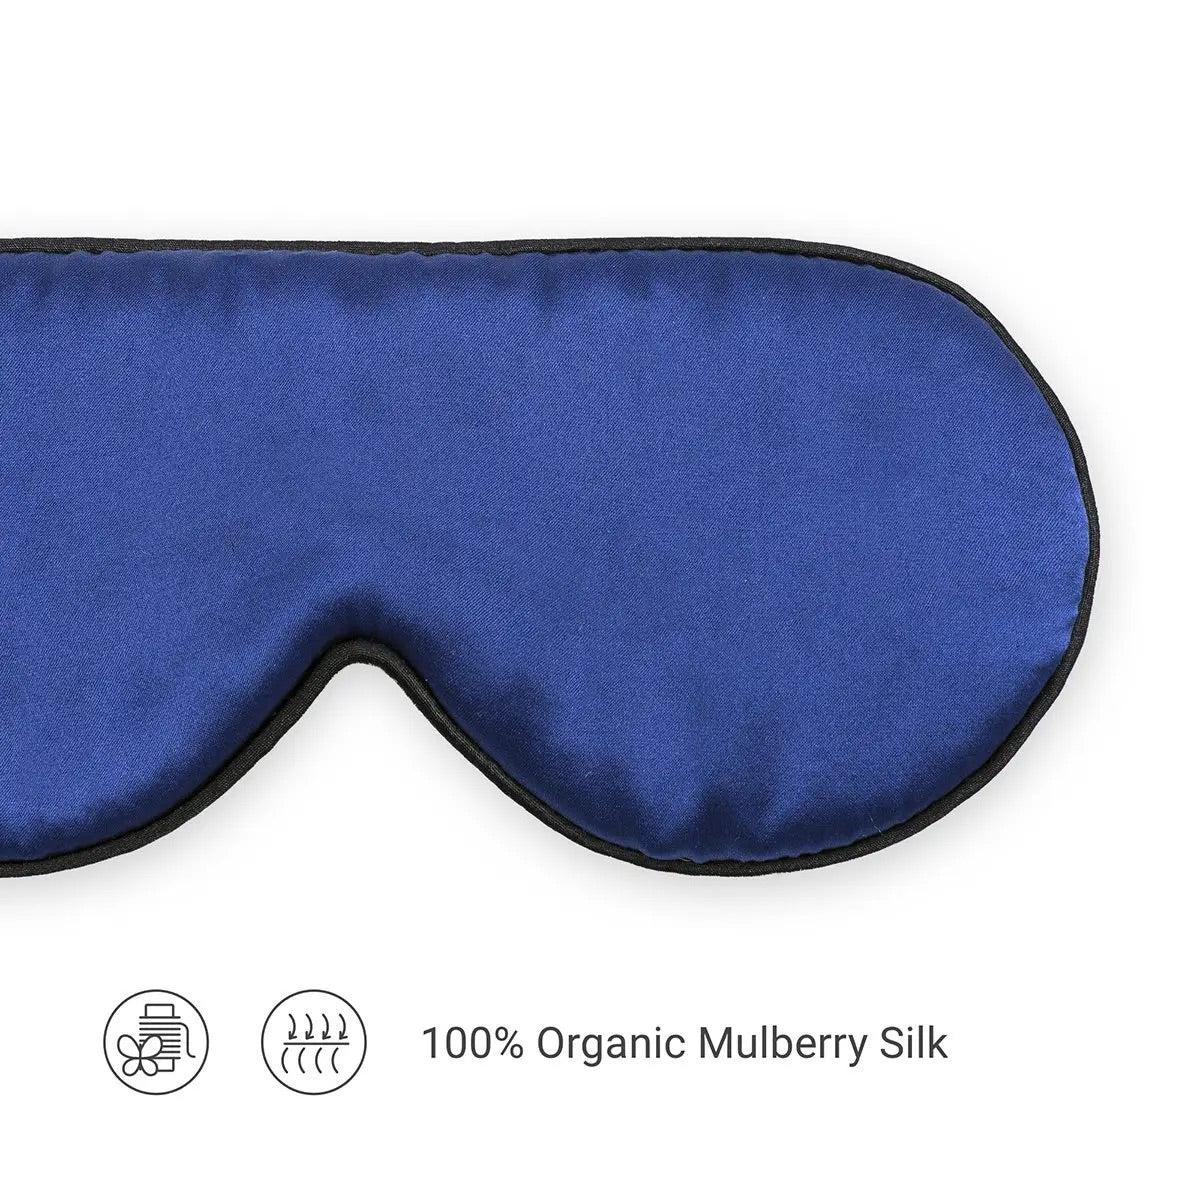 Silk Sleep Eye Mask - Adjustable Strap